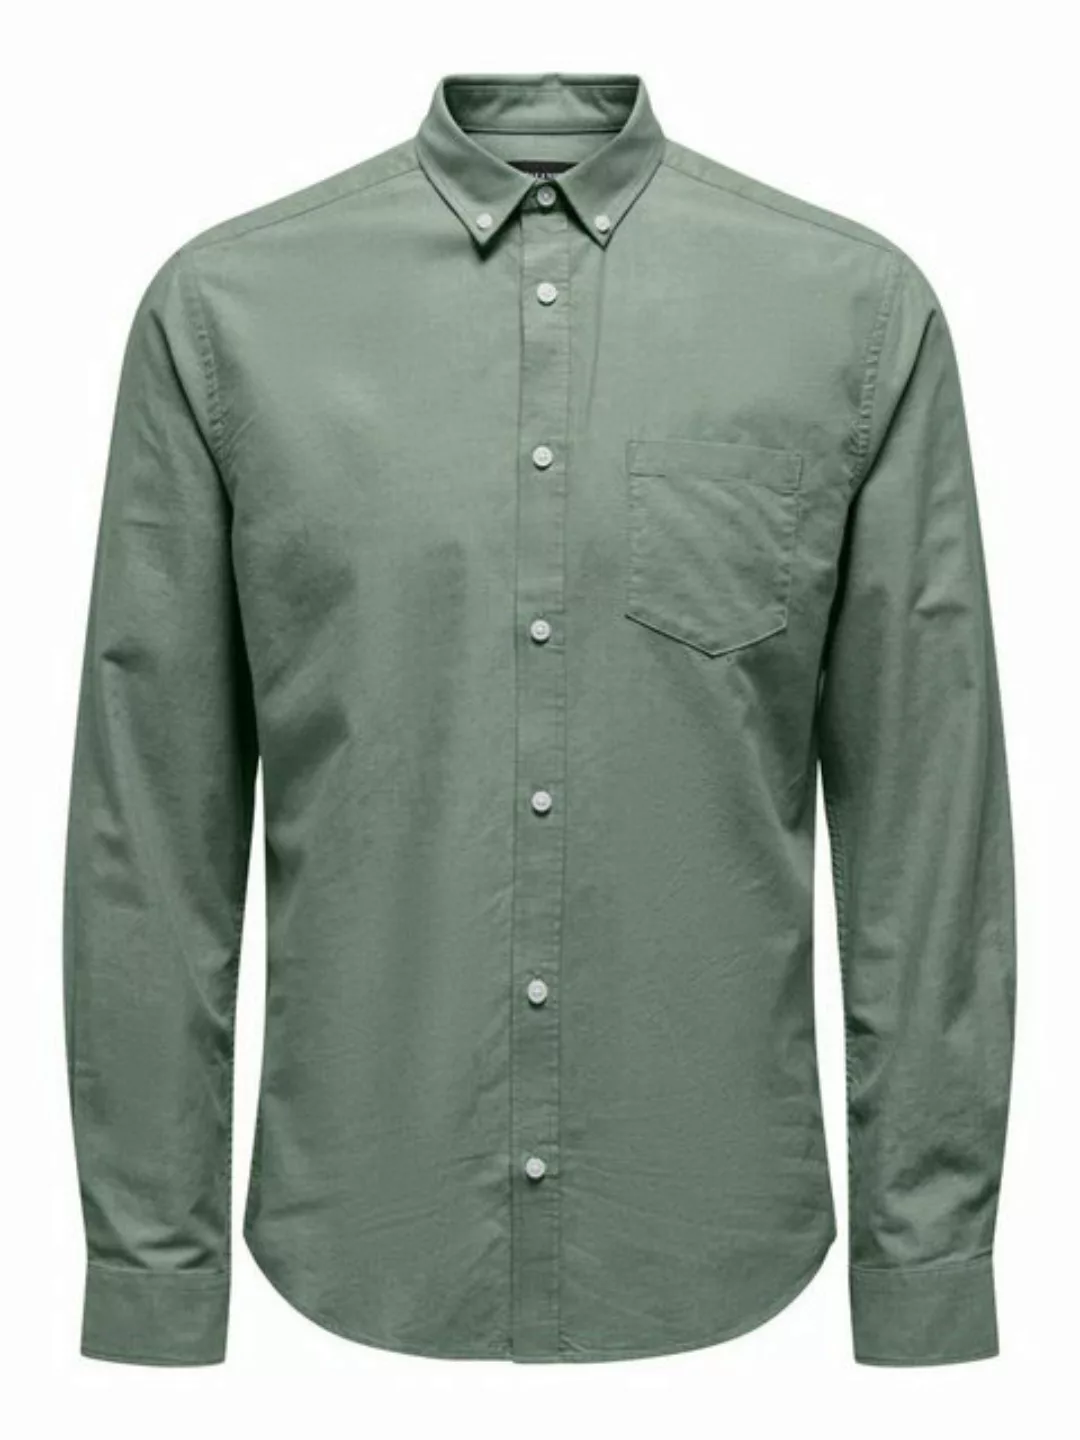 ONLY & SONS Langarmhemd Hemd Slim Fit Langarm Oxford Hemd 7802 in Dunkelgrü günstig online kaufen